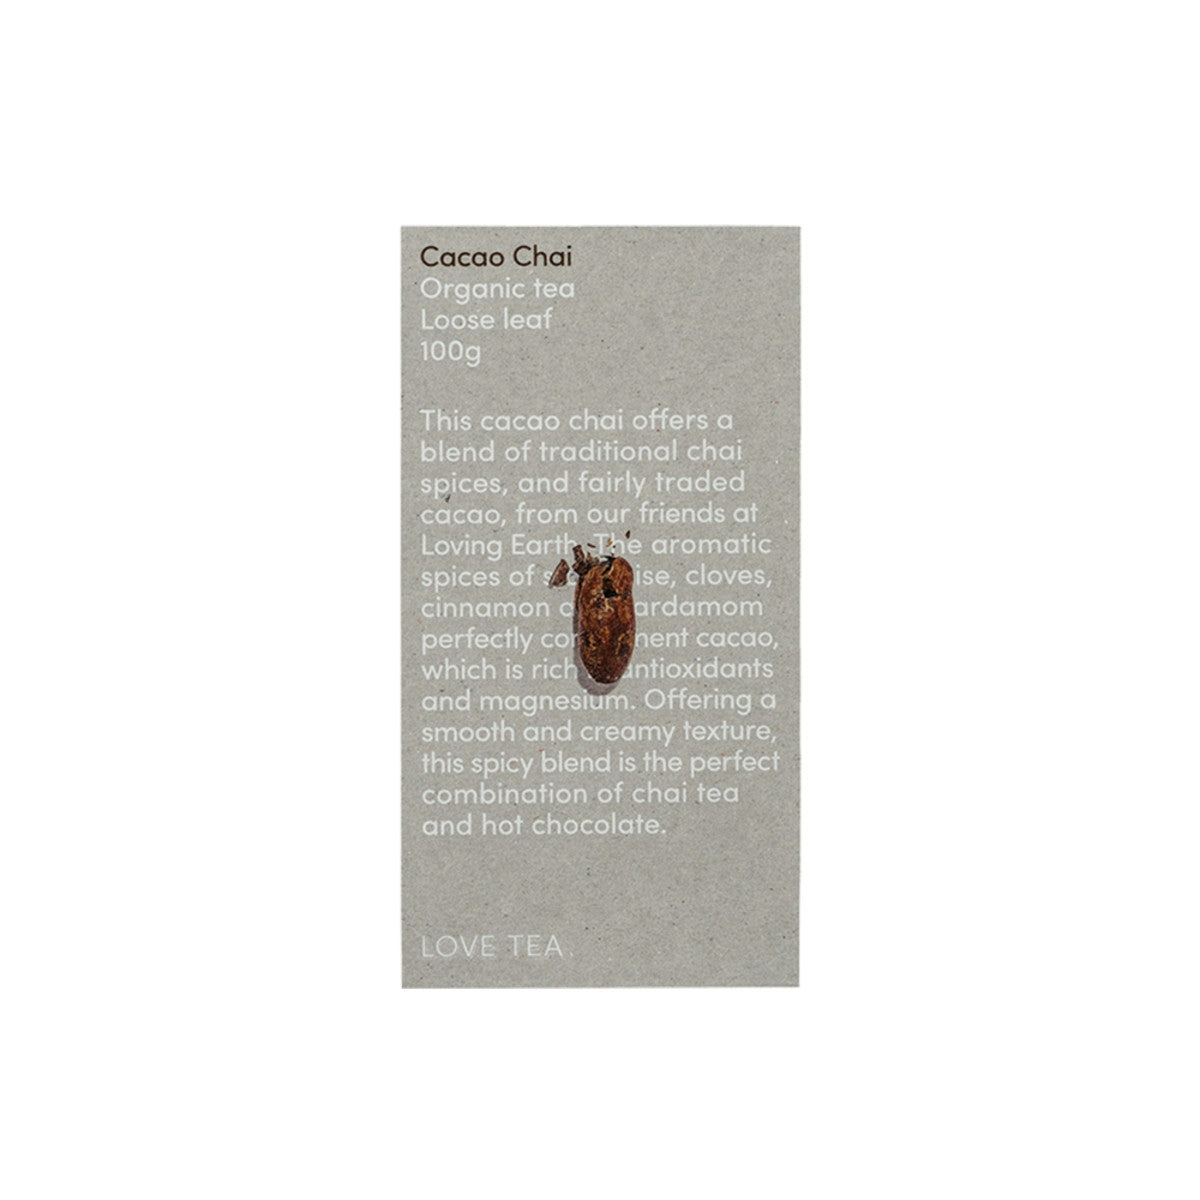 image of Love Tea Organic Cacao Chai Tea Loose Leaf 100g on white background 